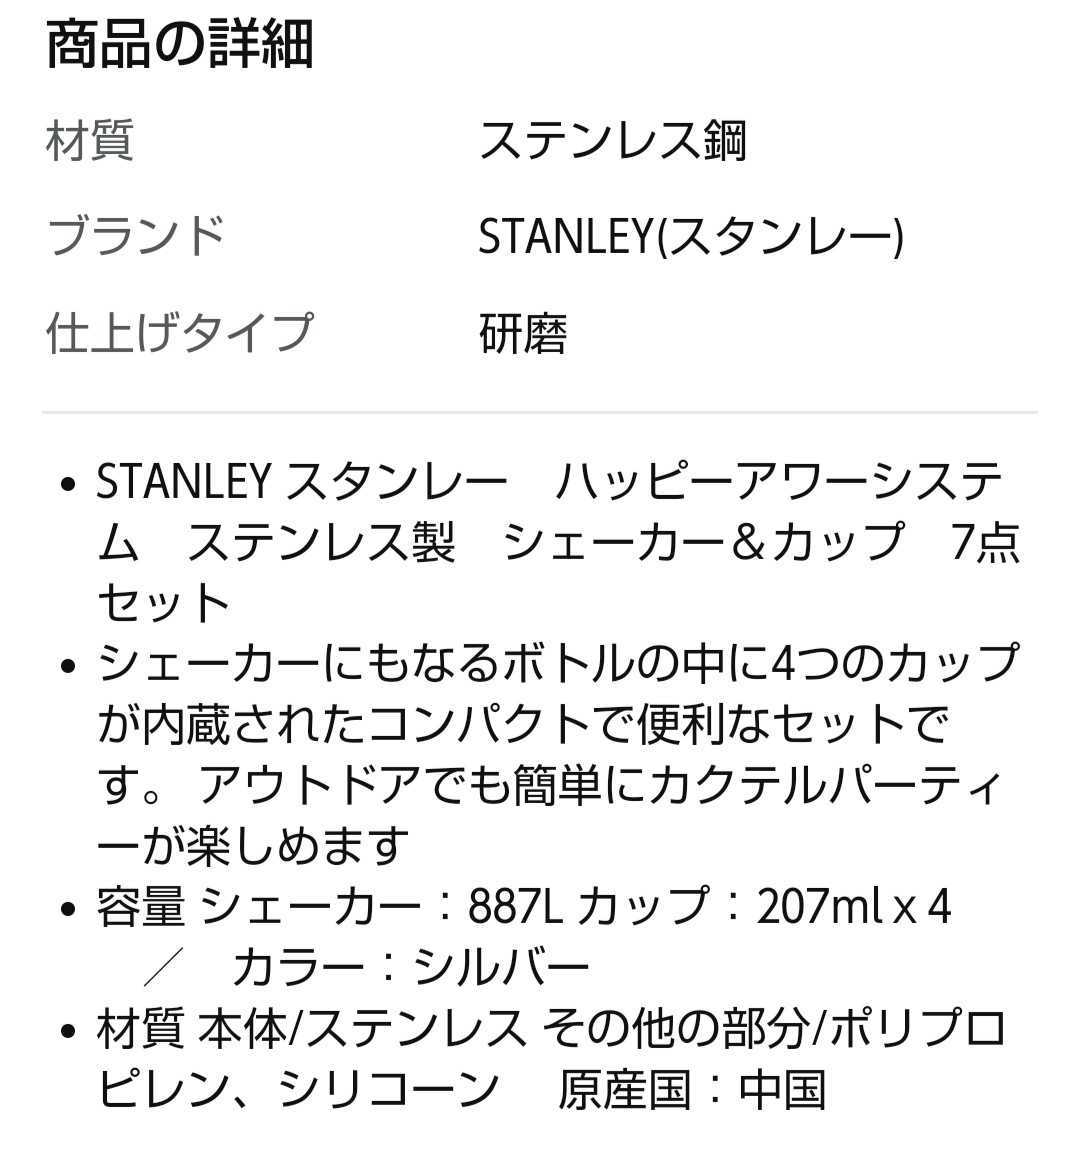 STANLEY スタンレー ハッピーアワーシステム 真空ボトル ステンレス製 ステンレスボトル シェーカー 新品未使用